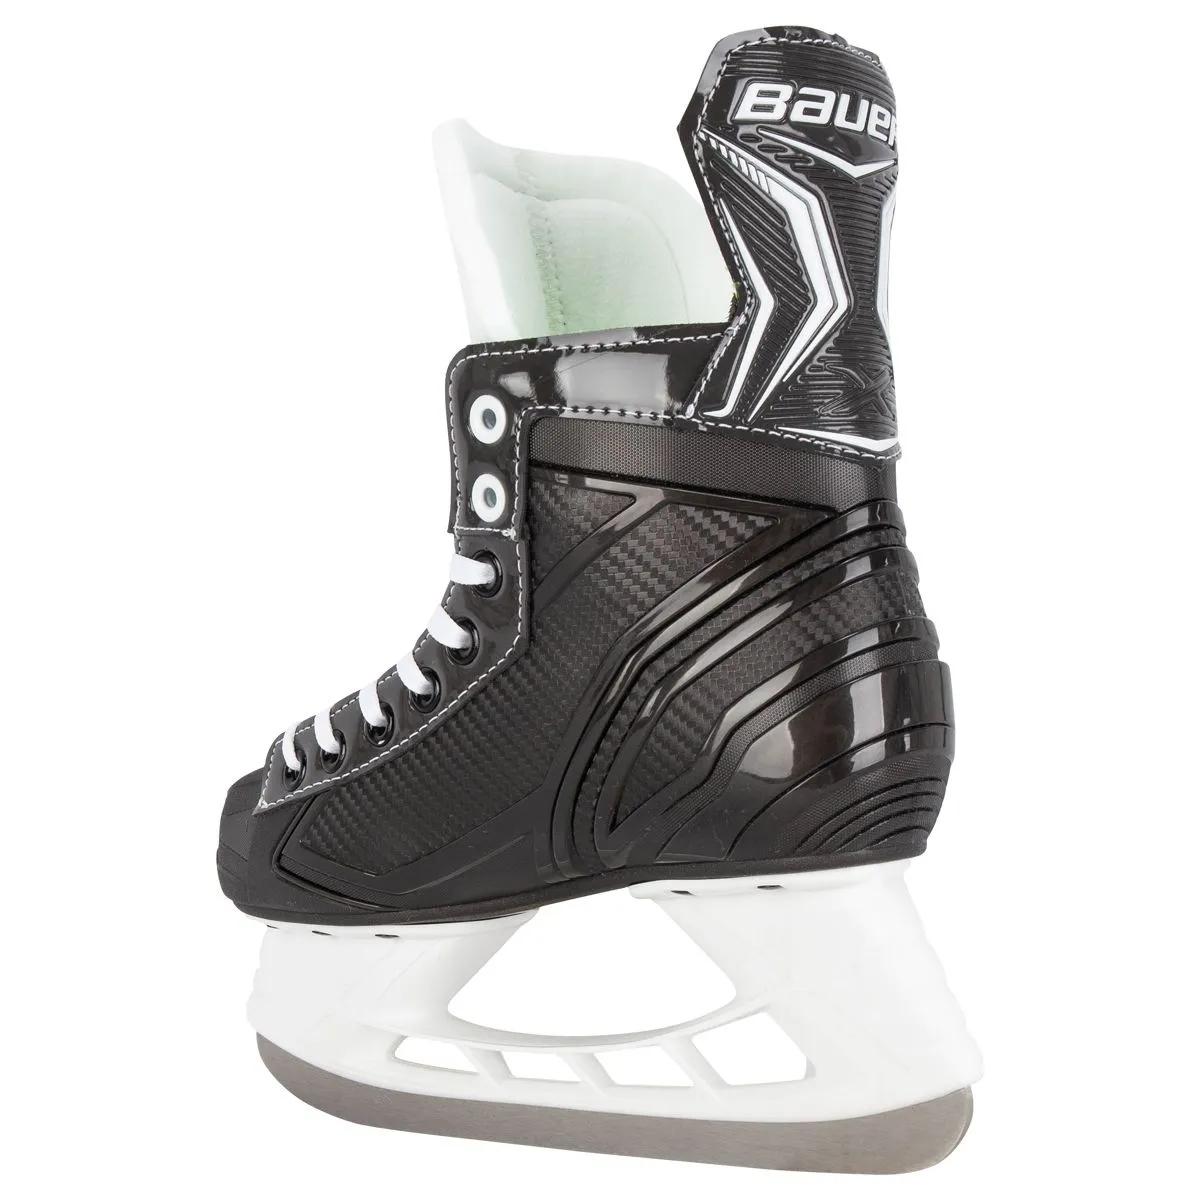 Bauer X-LS Jr. Hockey Skatesproduct zoom image #6